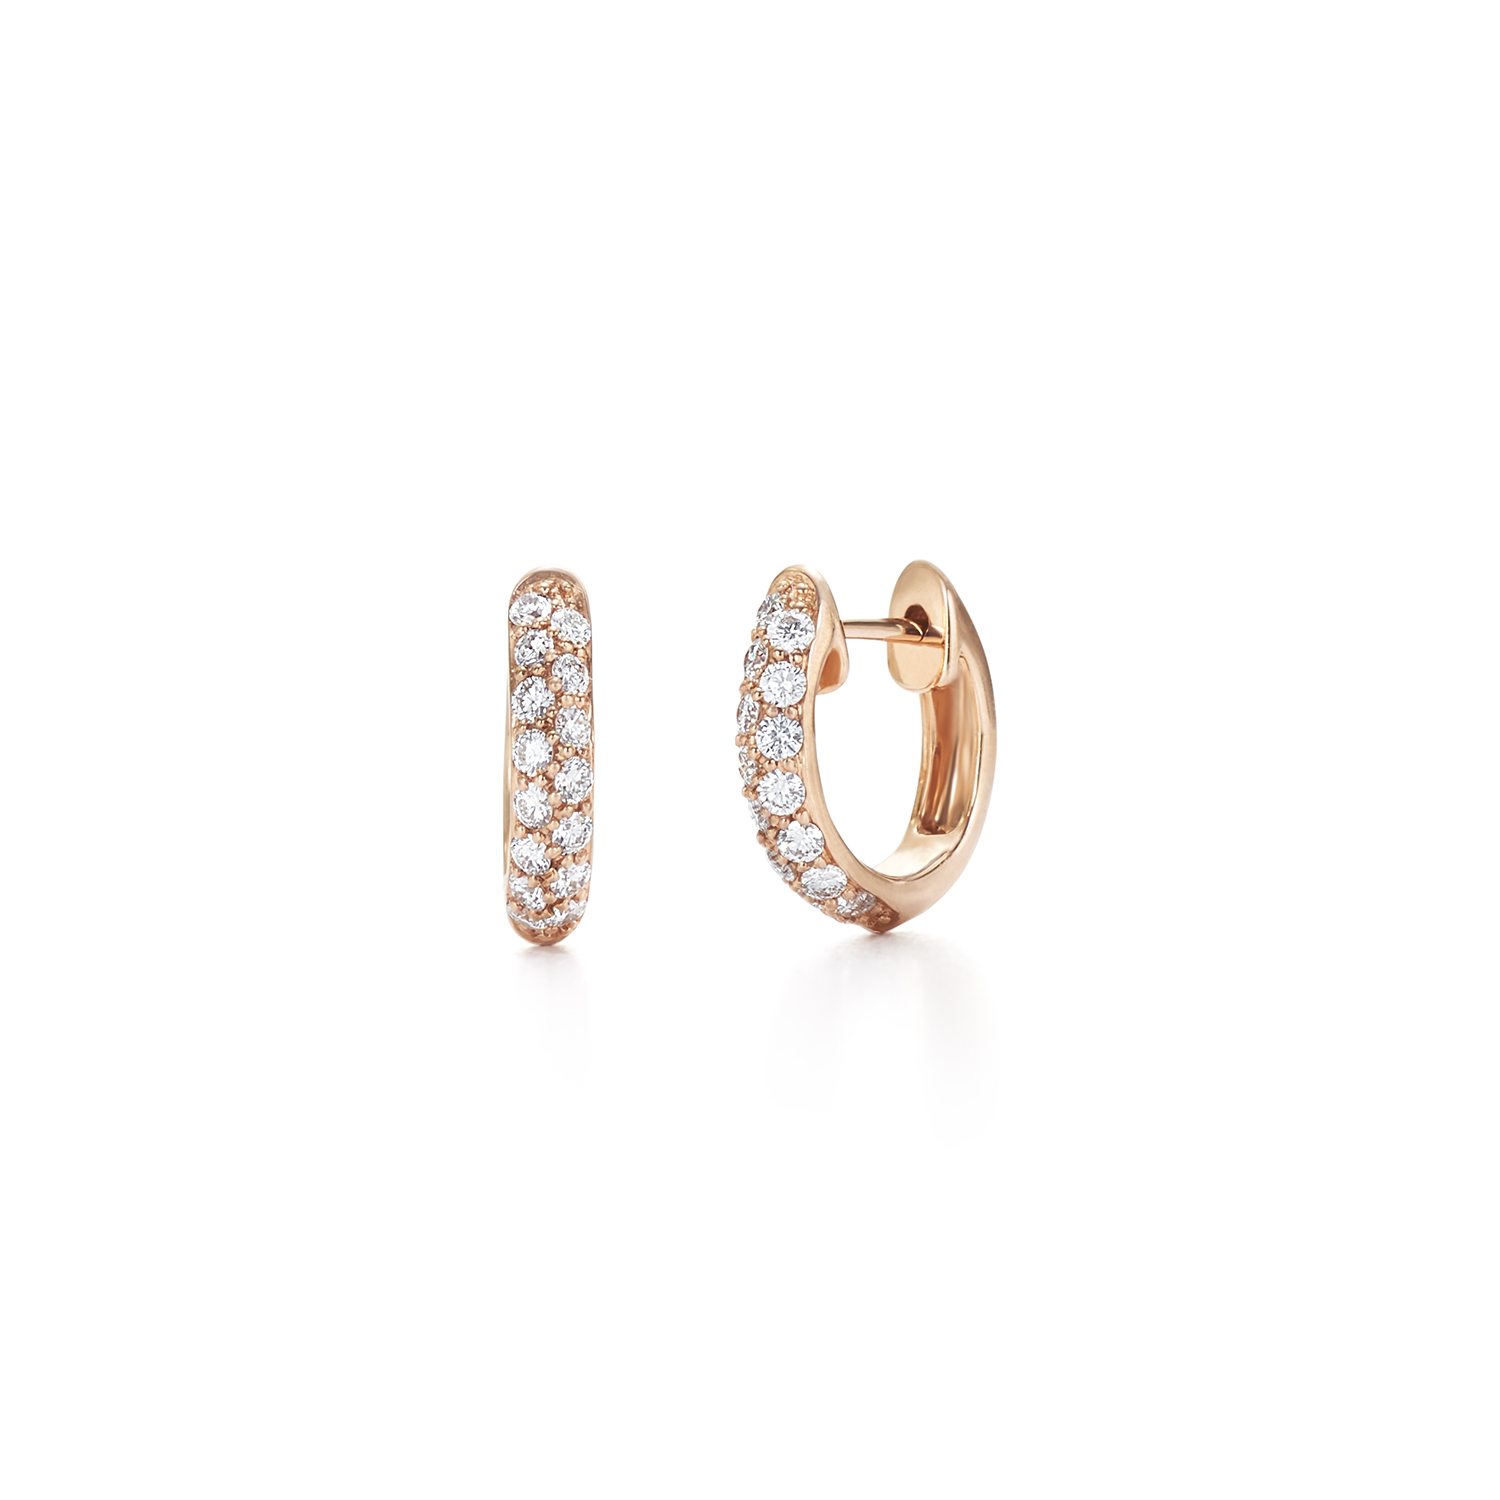 Moonlight Petite Hoop Earrings with Pavé Diamonds in 18K Rose Gold - Kwiat